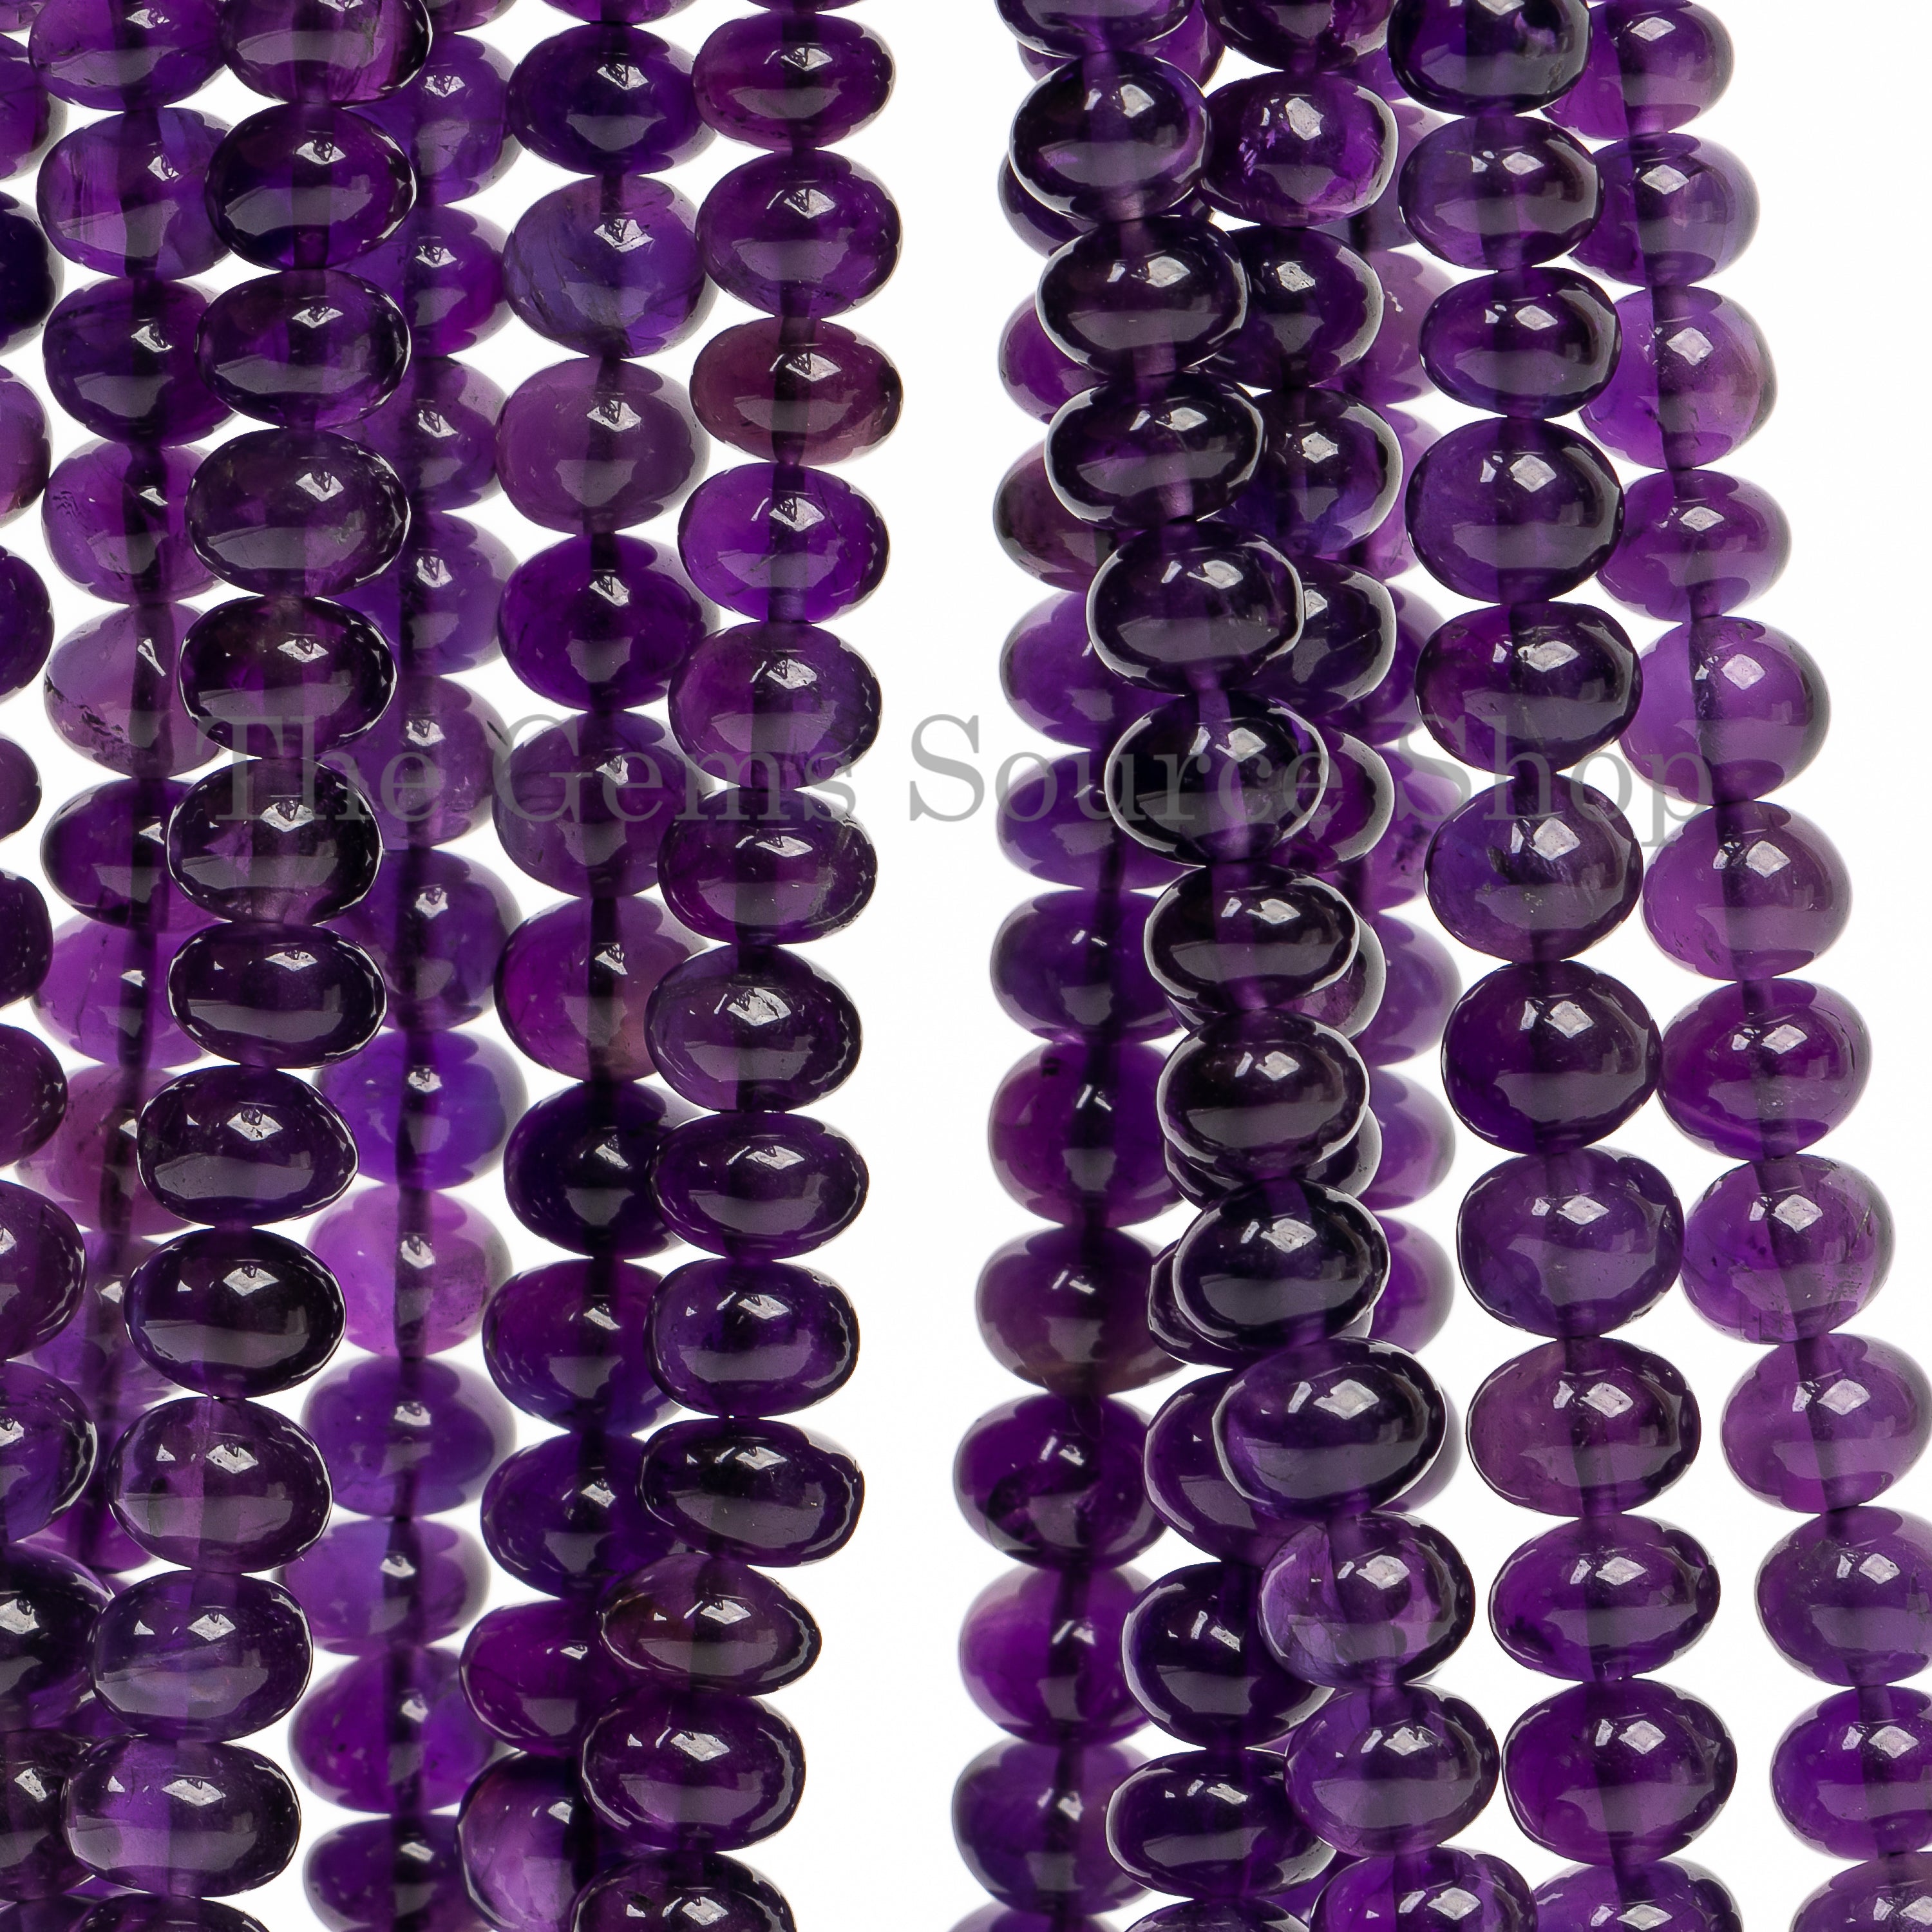 6-9mm Amethyst Plain Rondelle Beads Amethyst Rondelle Beads, Plain Amethyst Beads